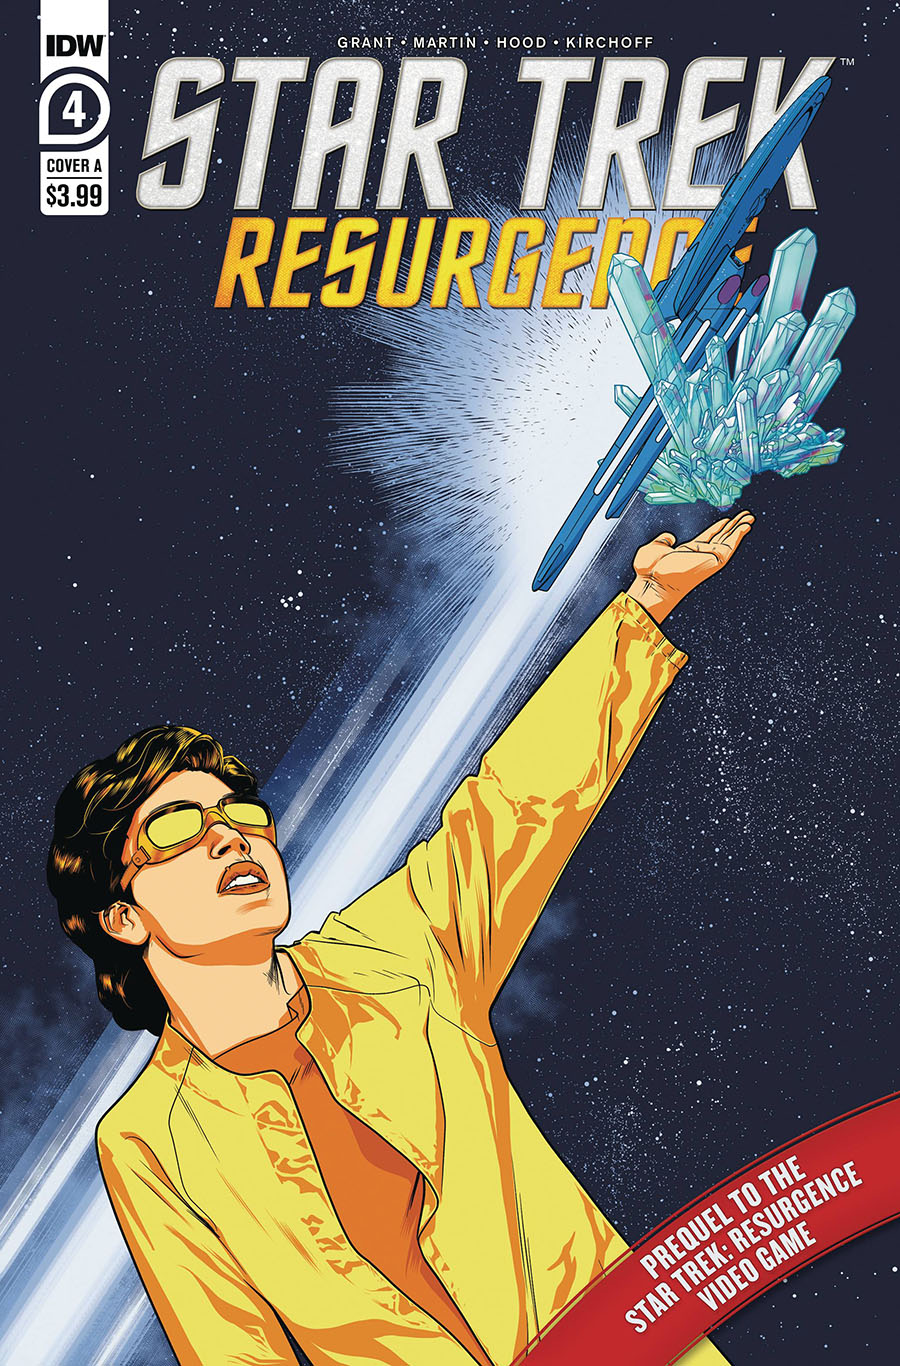 Star Trek Resurgence #4 Cover A Regular Josh Hood Cover